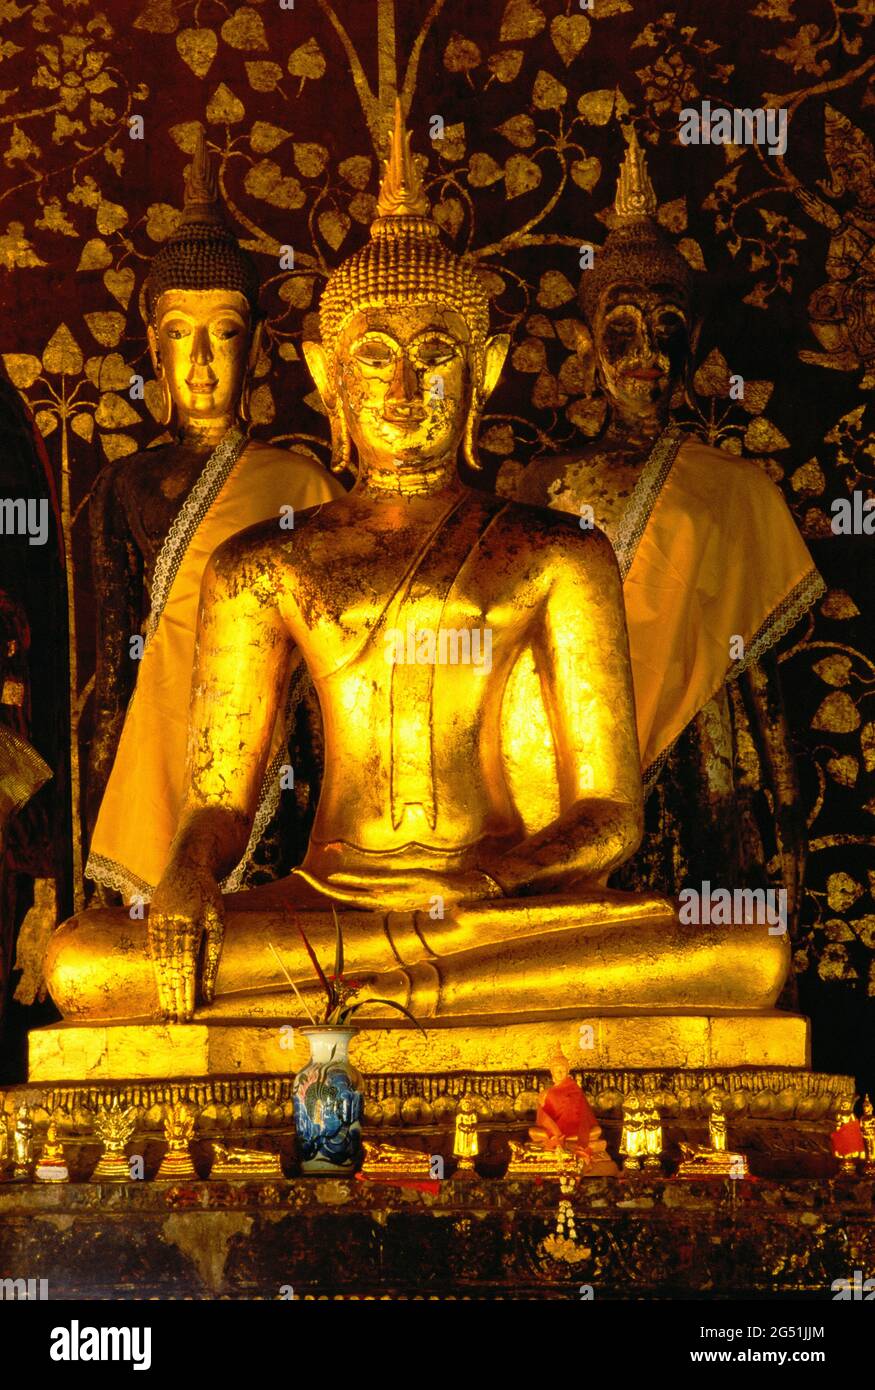 Golden Buddha statue inside of Wat Phra That Lampang Luang temple, Lampang, Thailand Stock Photo